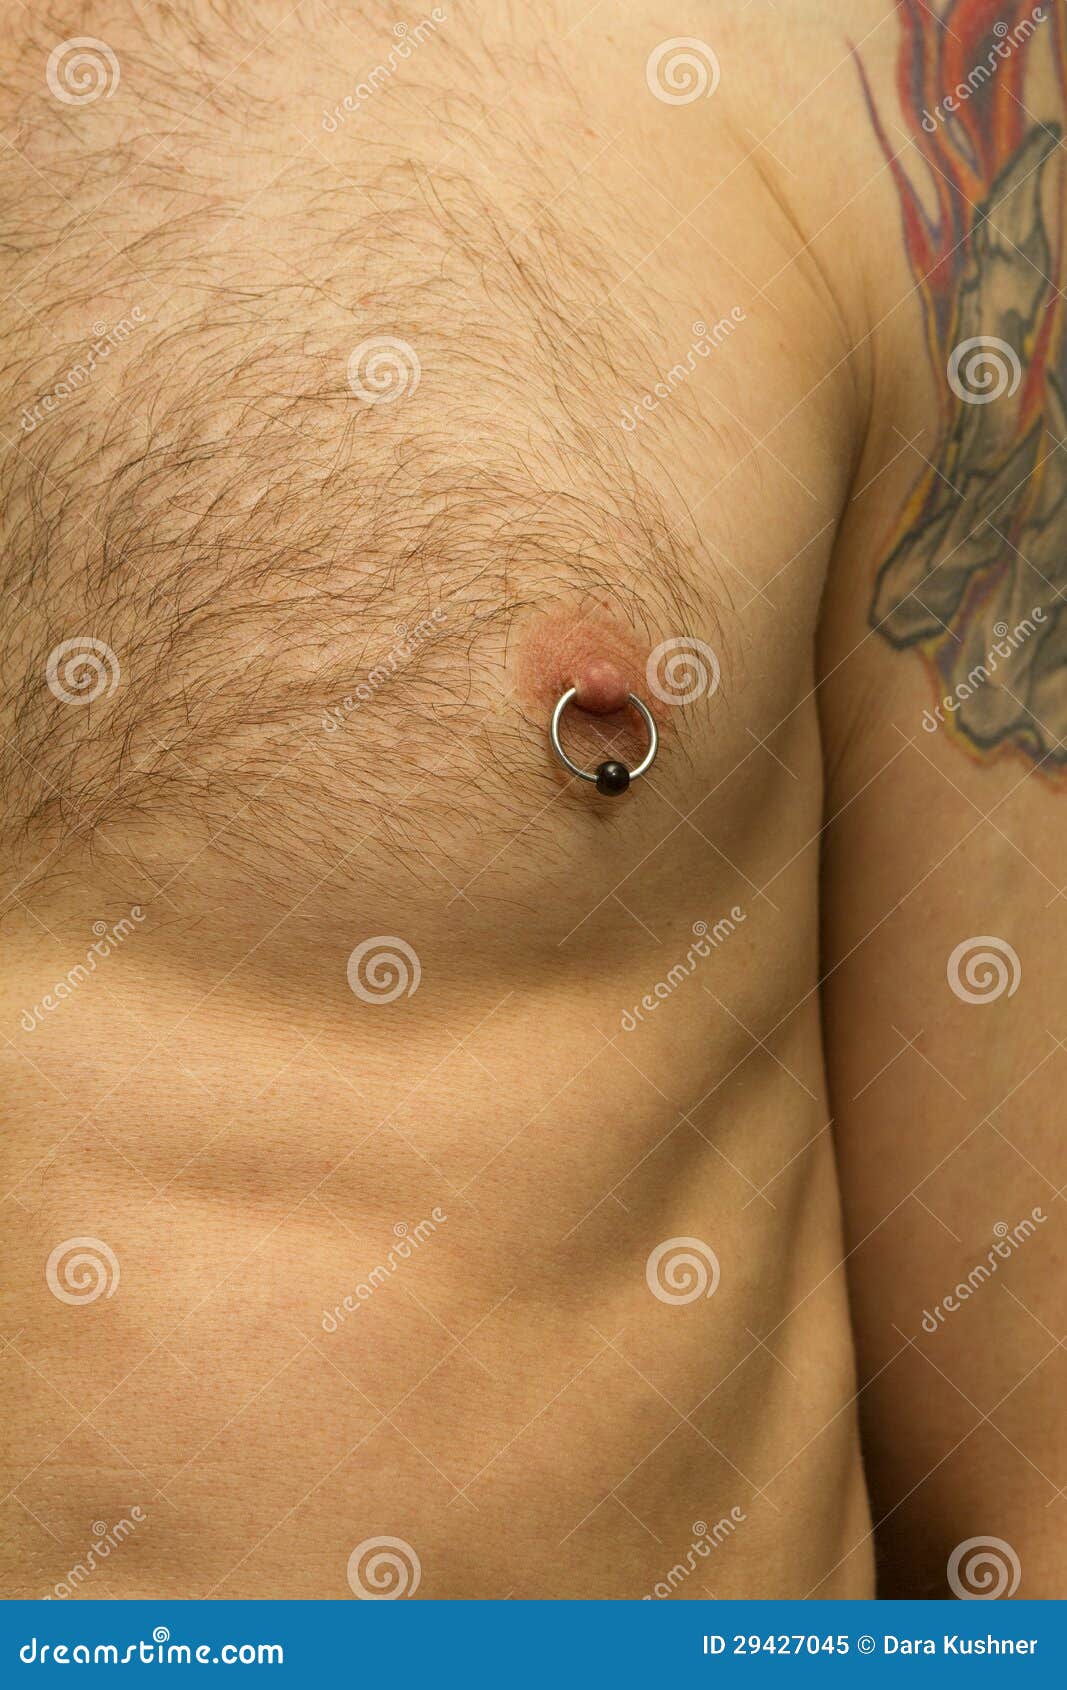 шишка в груди у мужчин фото 47